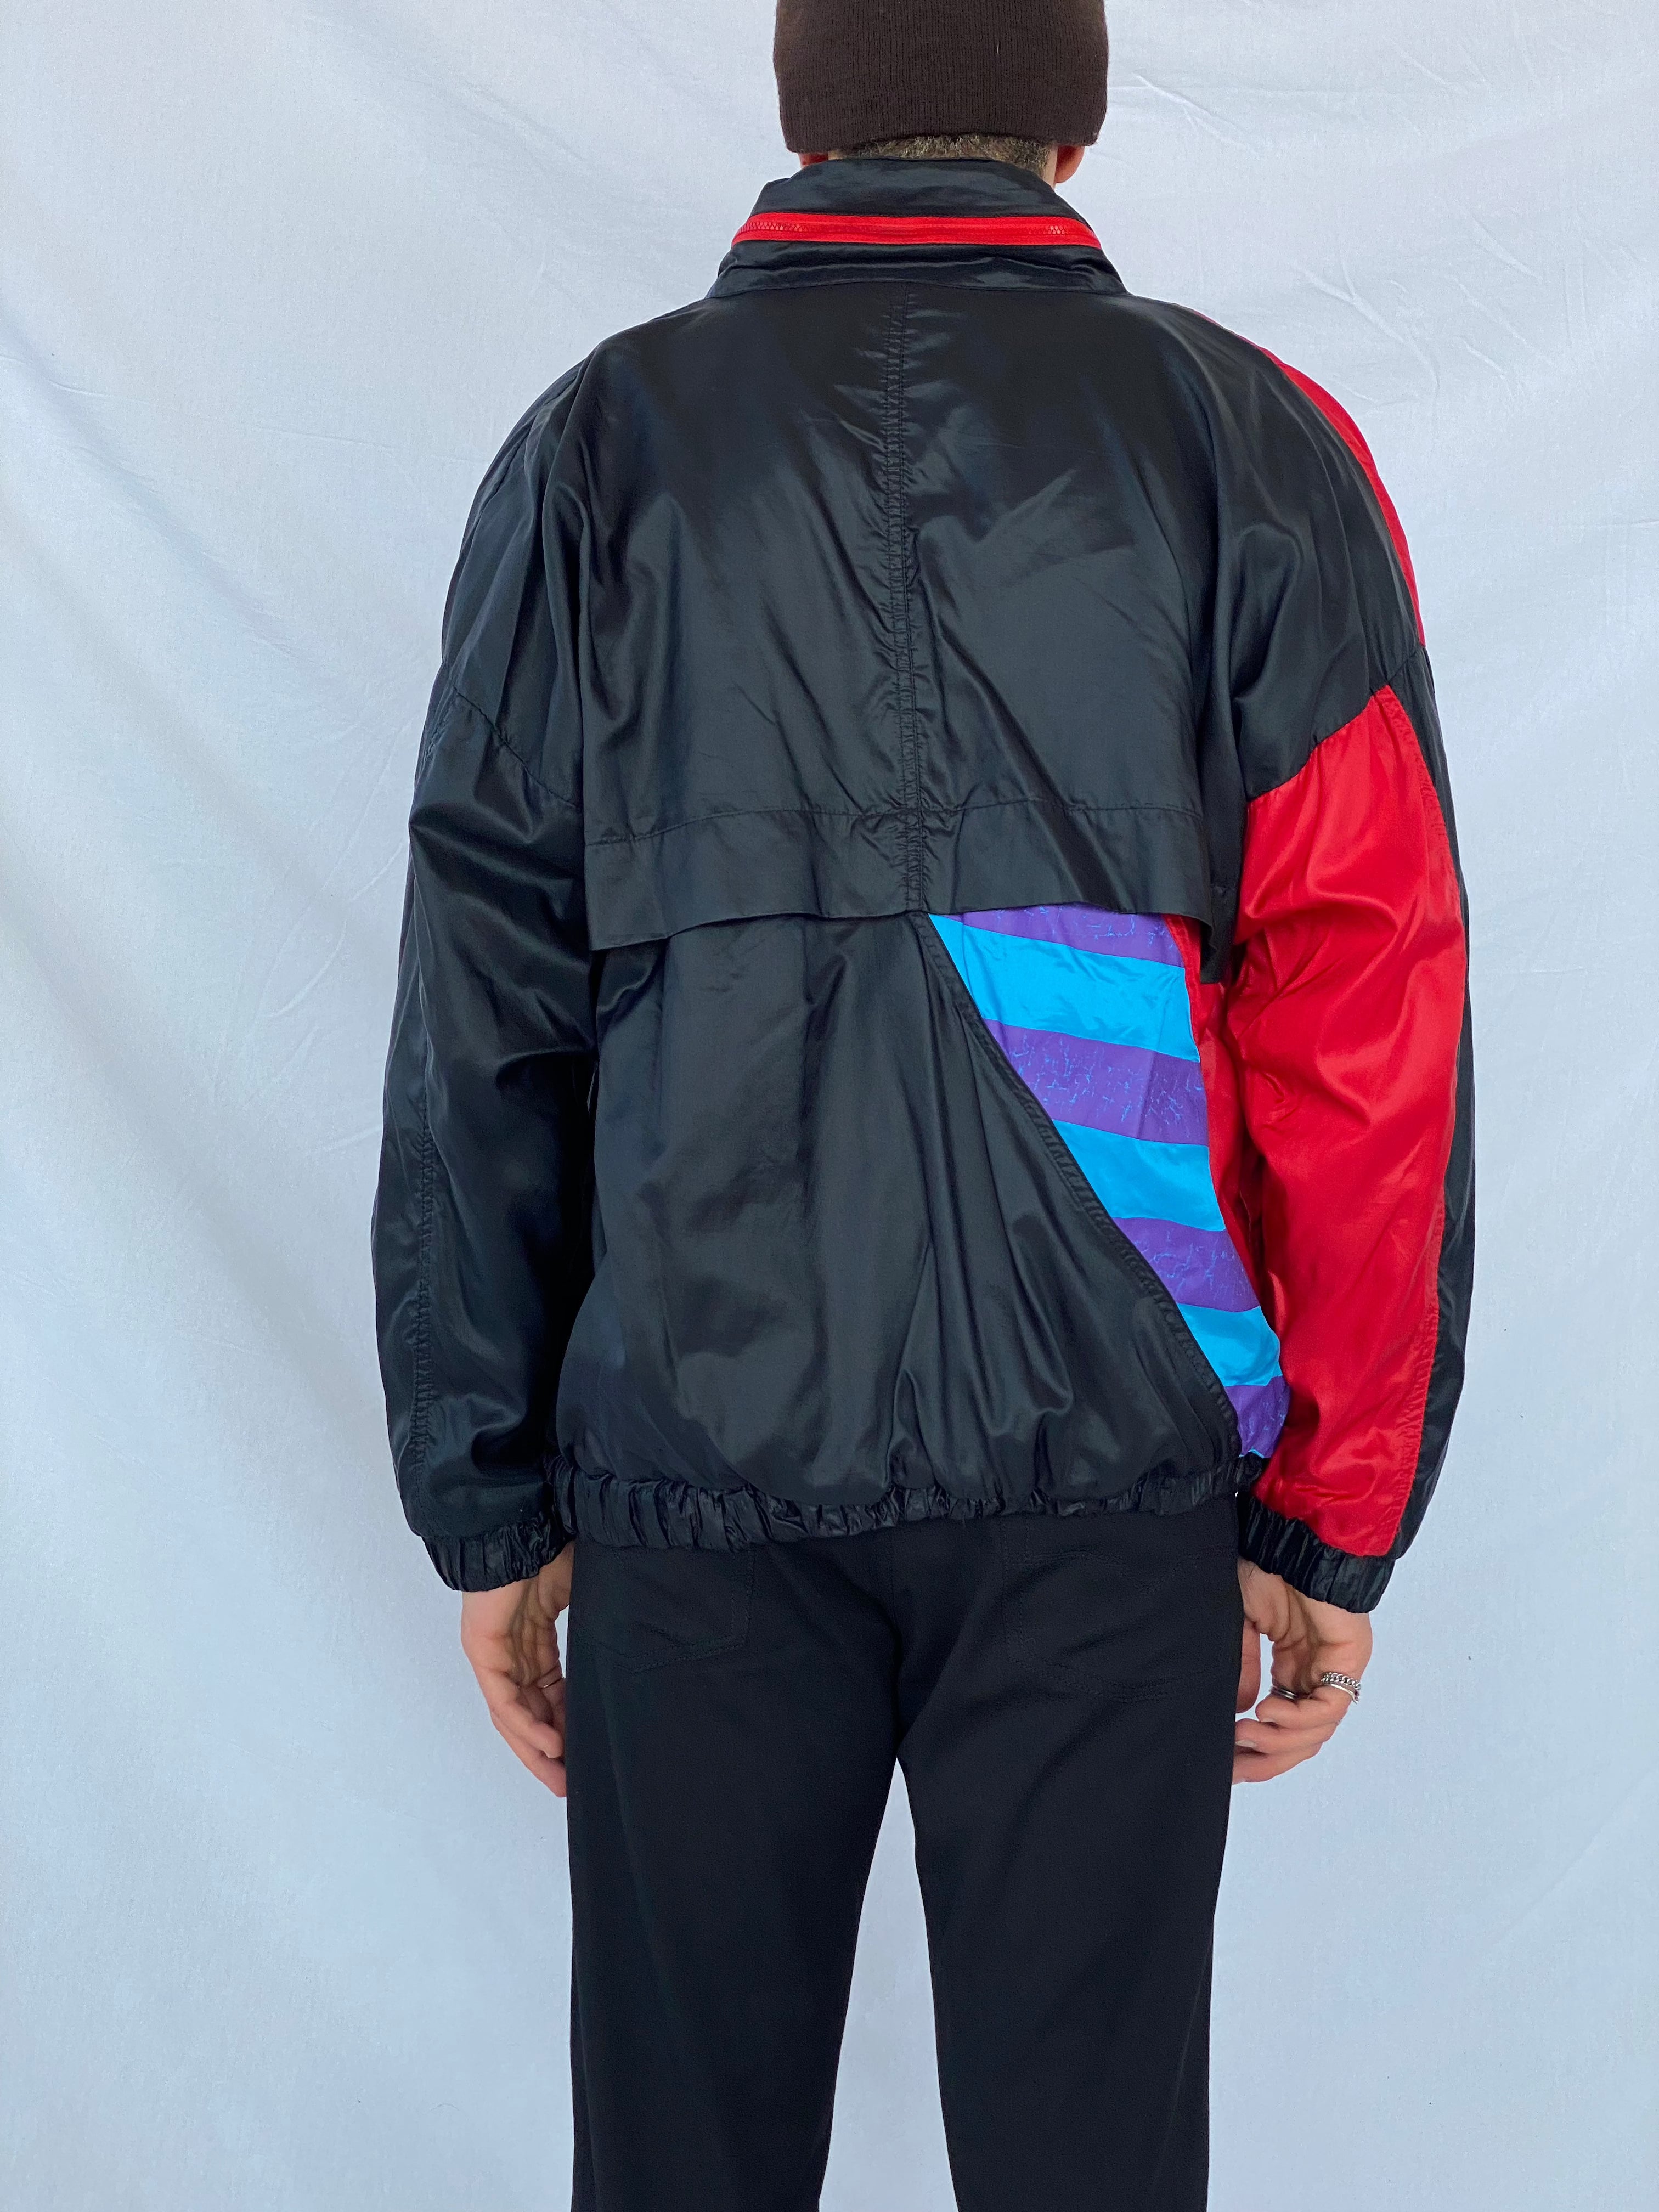 New Balance Windbreaker Jacket